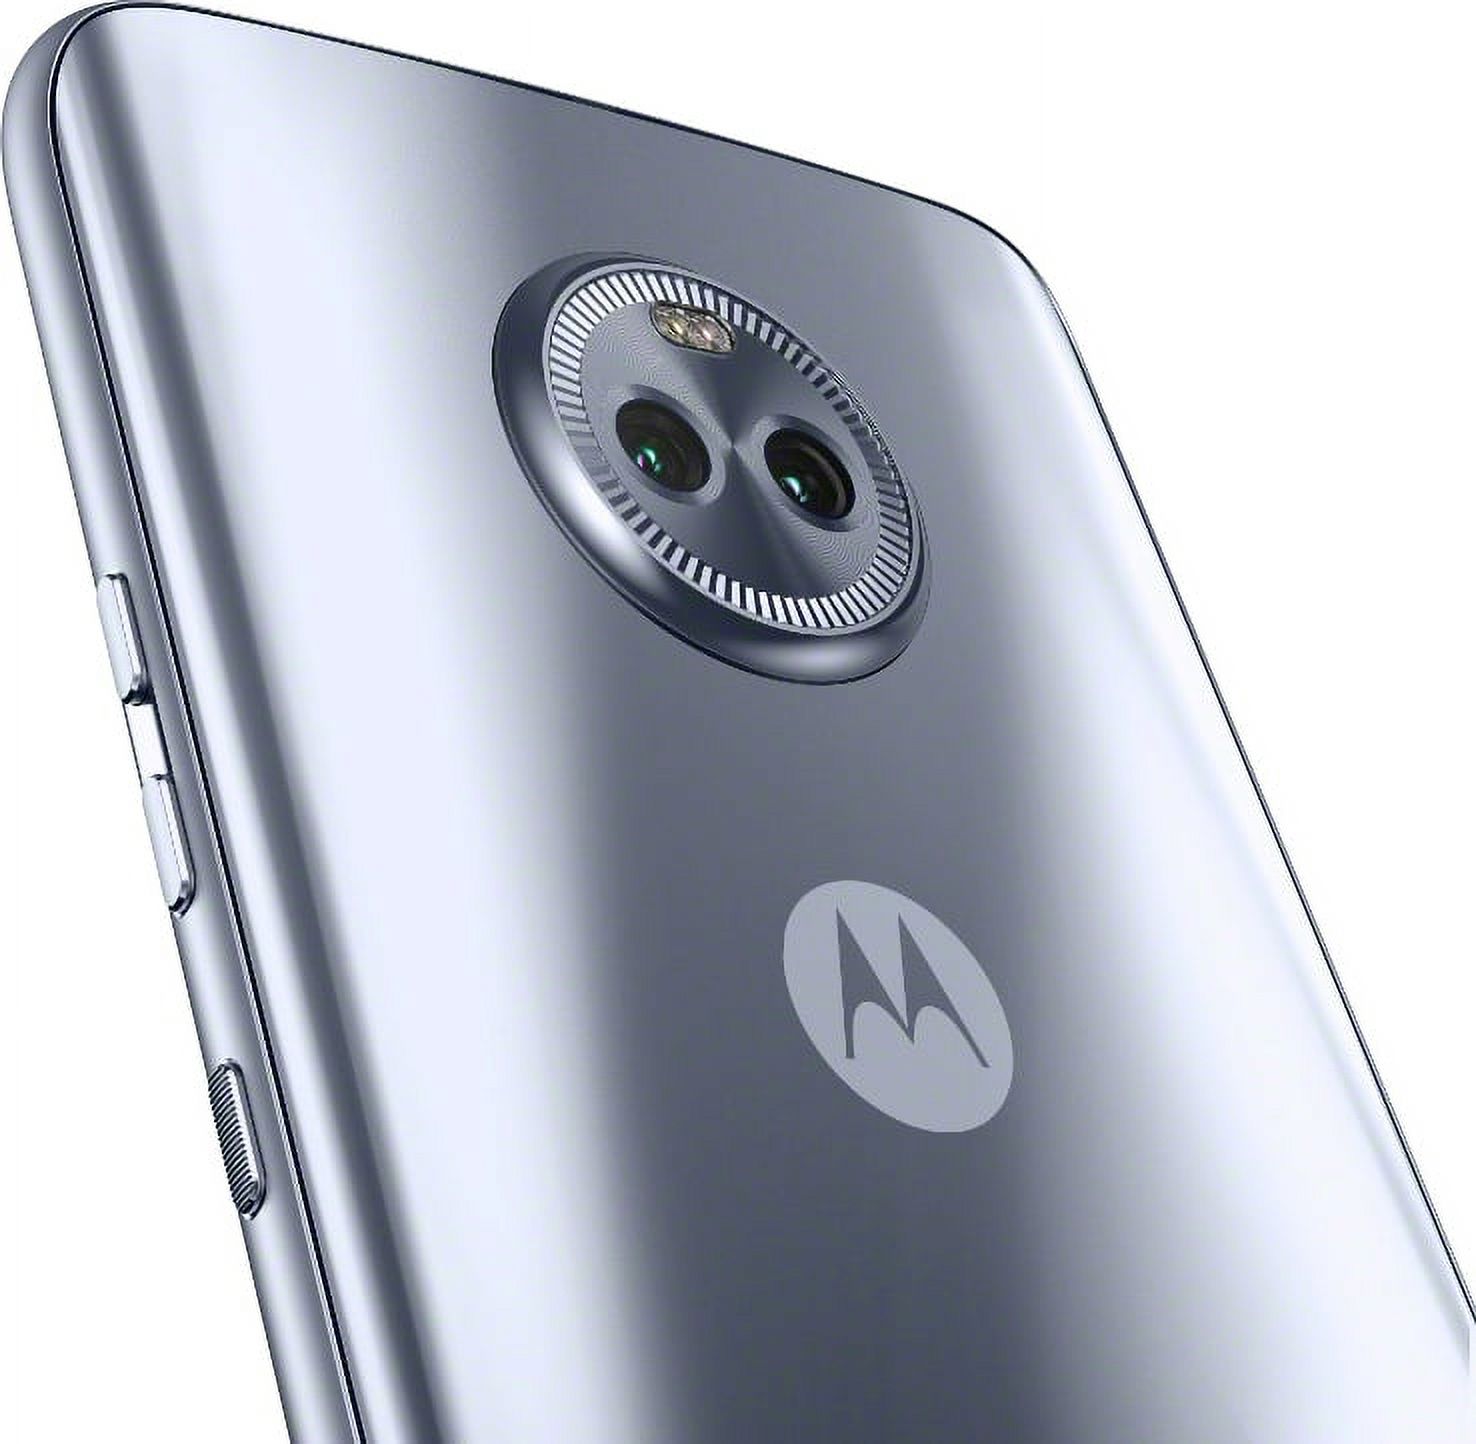 Motorola Moto X4 32GB Unlocked Smartphone, Sterling Blue - image 3 of 5